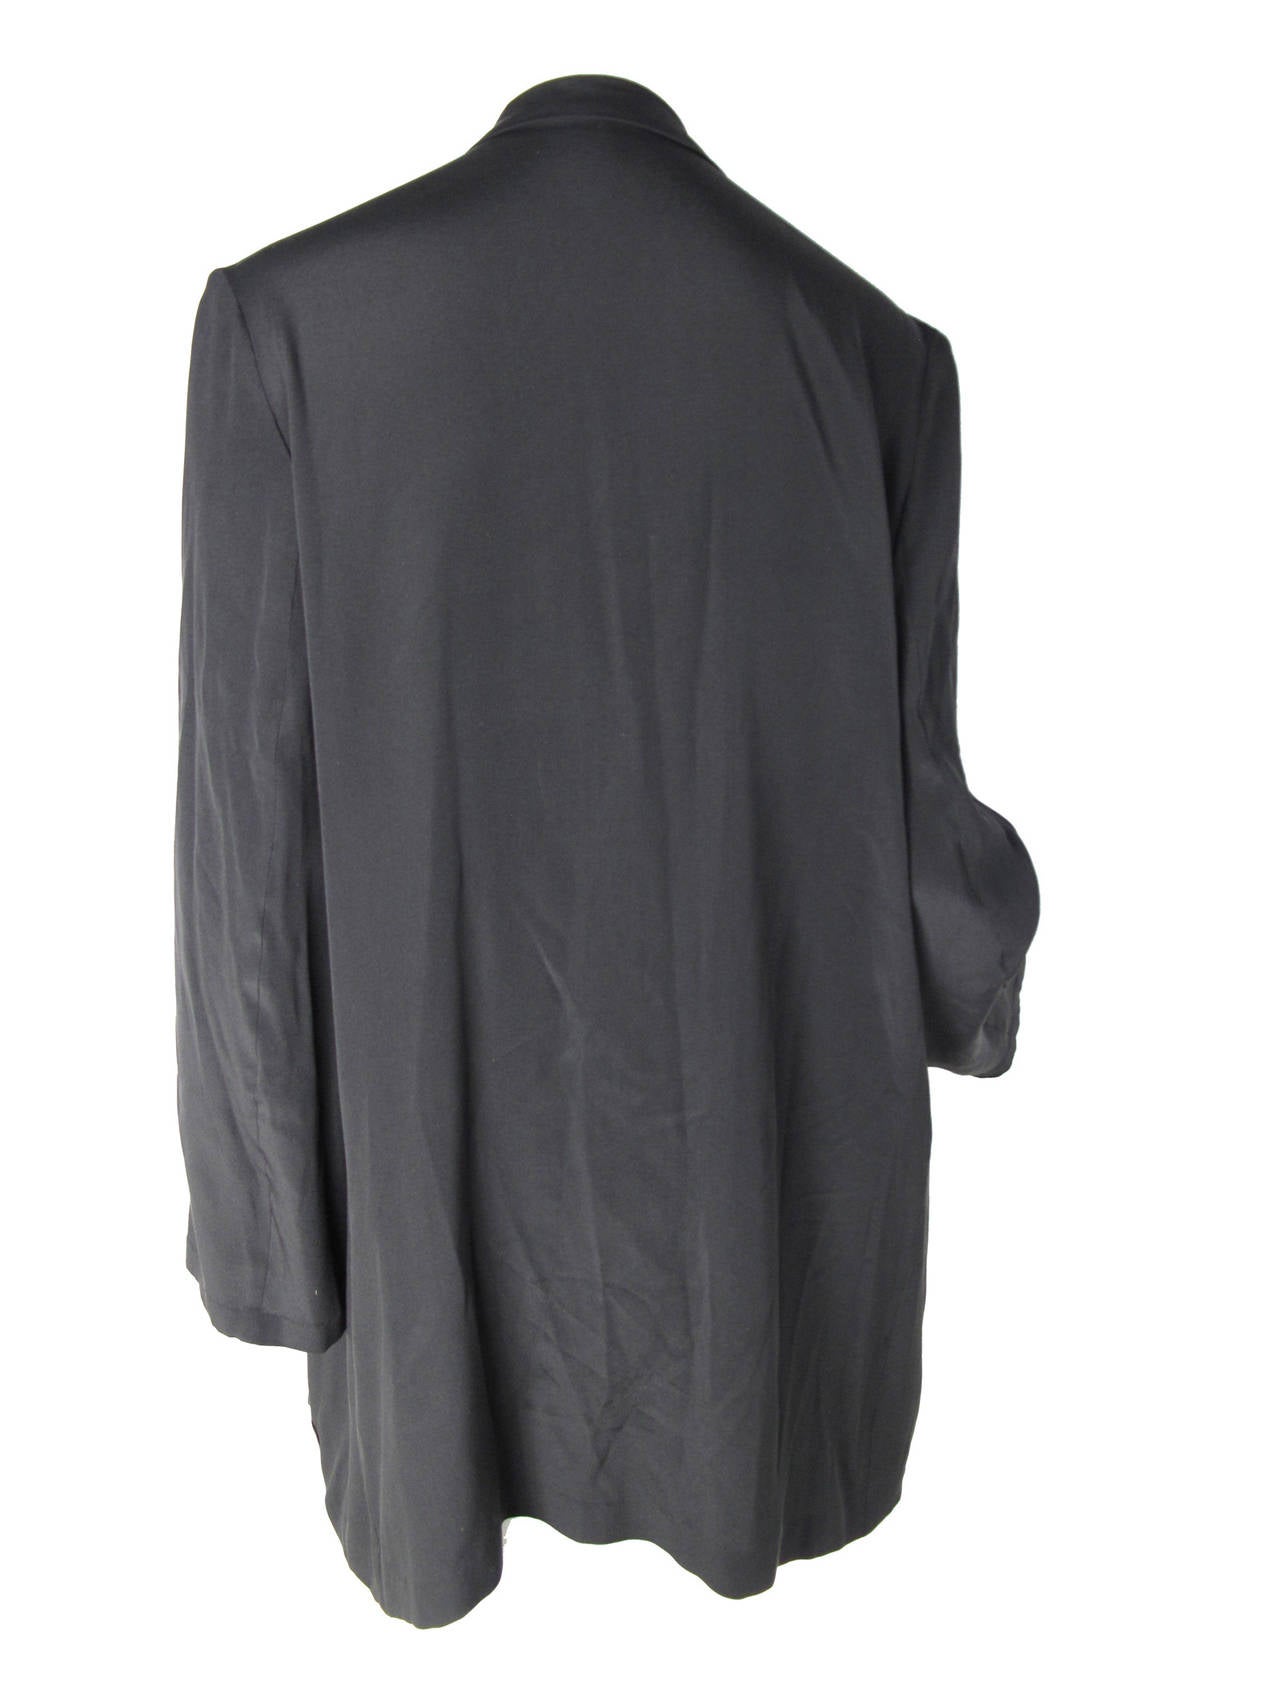 Women's Yohji Yamamoto silk blazer with attached silk shirt piece